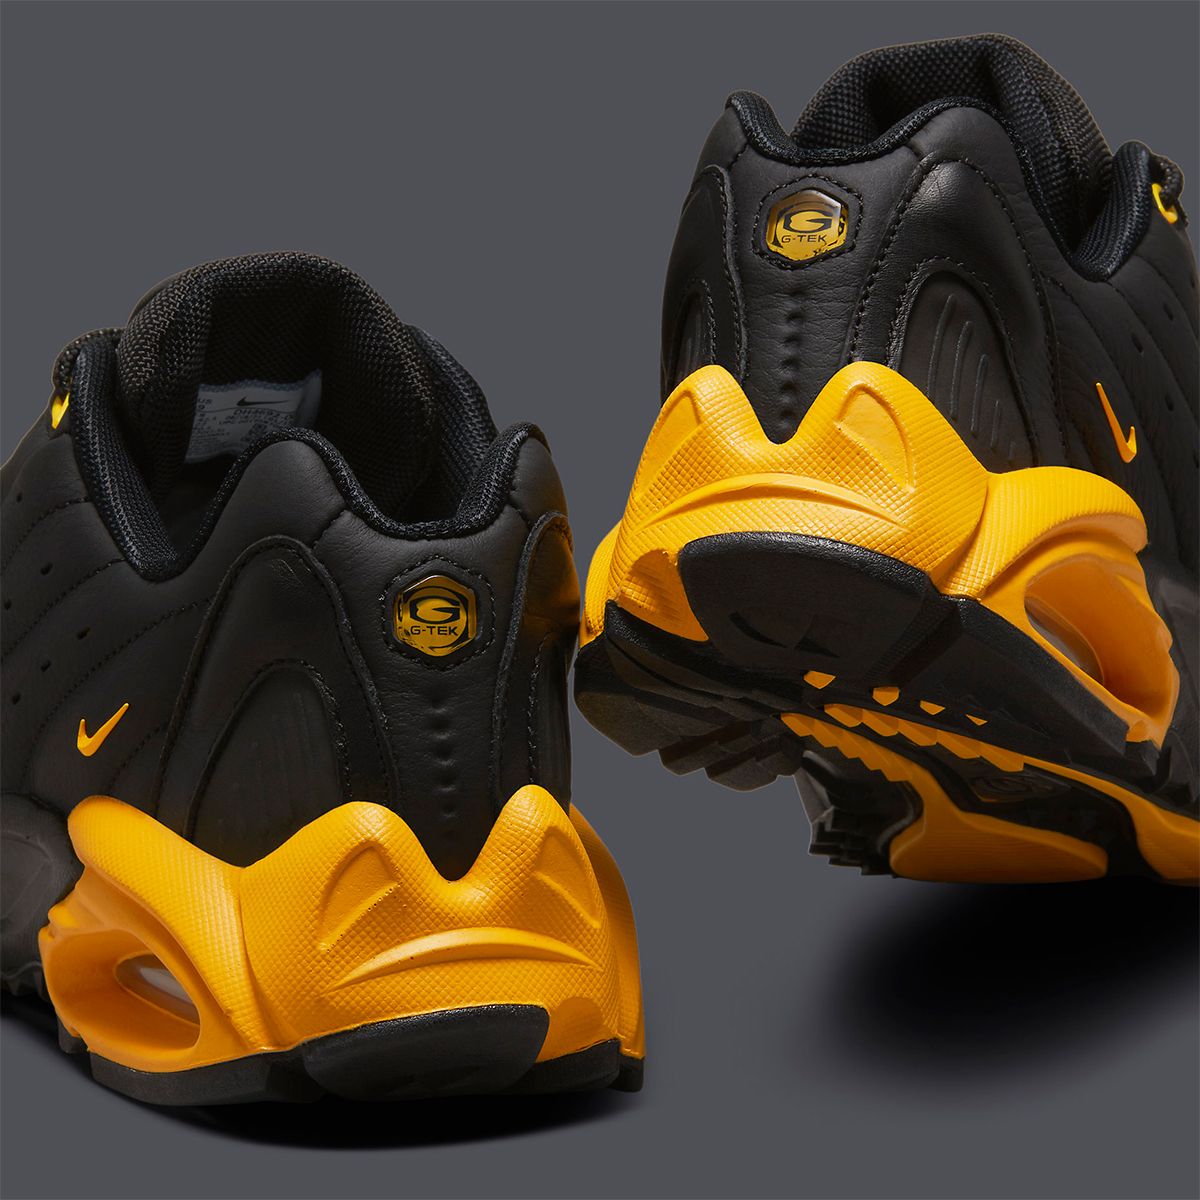 Drake's Nike Hot Step Air Terra NOCTA in “Black/University Gold